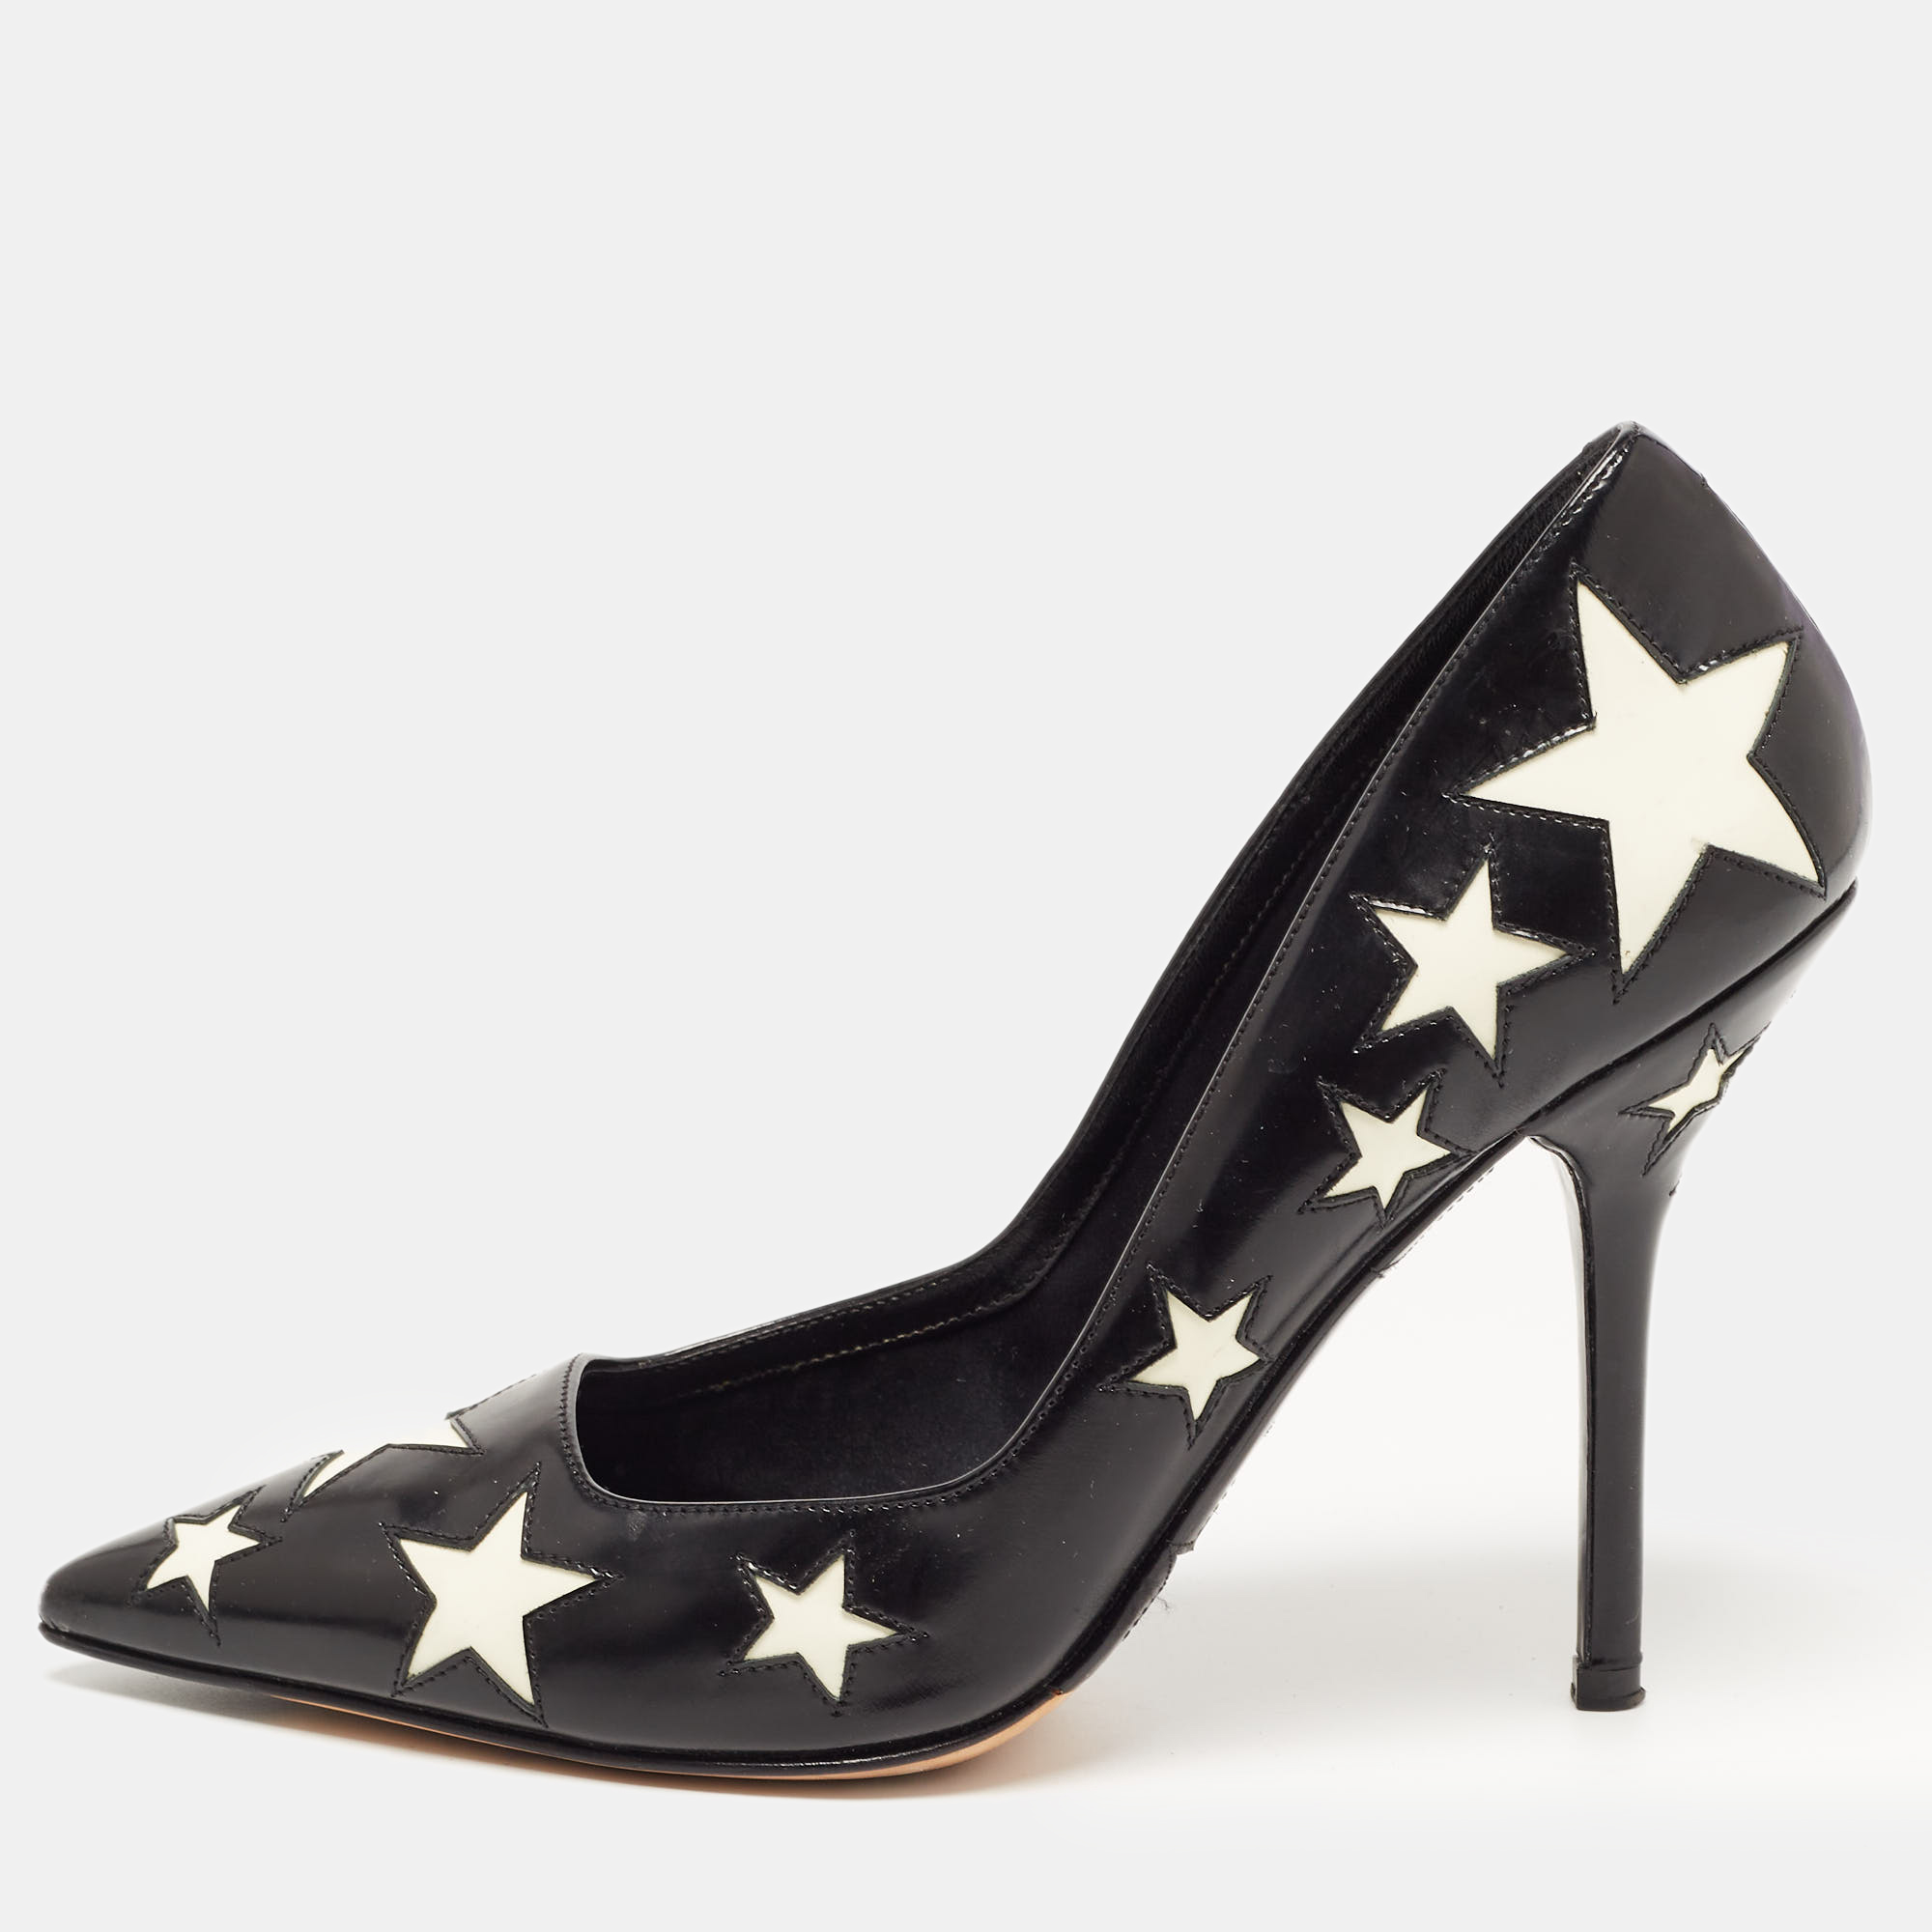 Dolce & Gabbana Black/White Leather Star Pumps Size 39